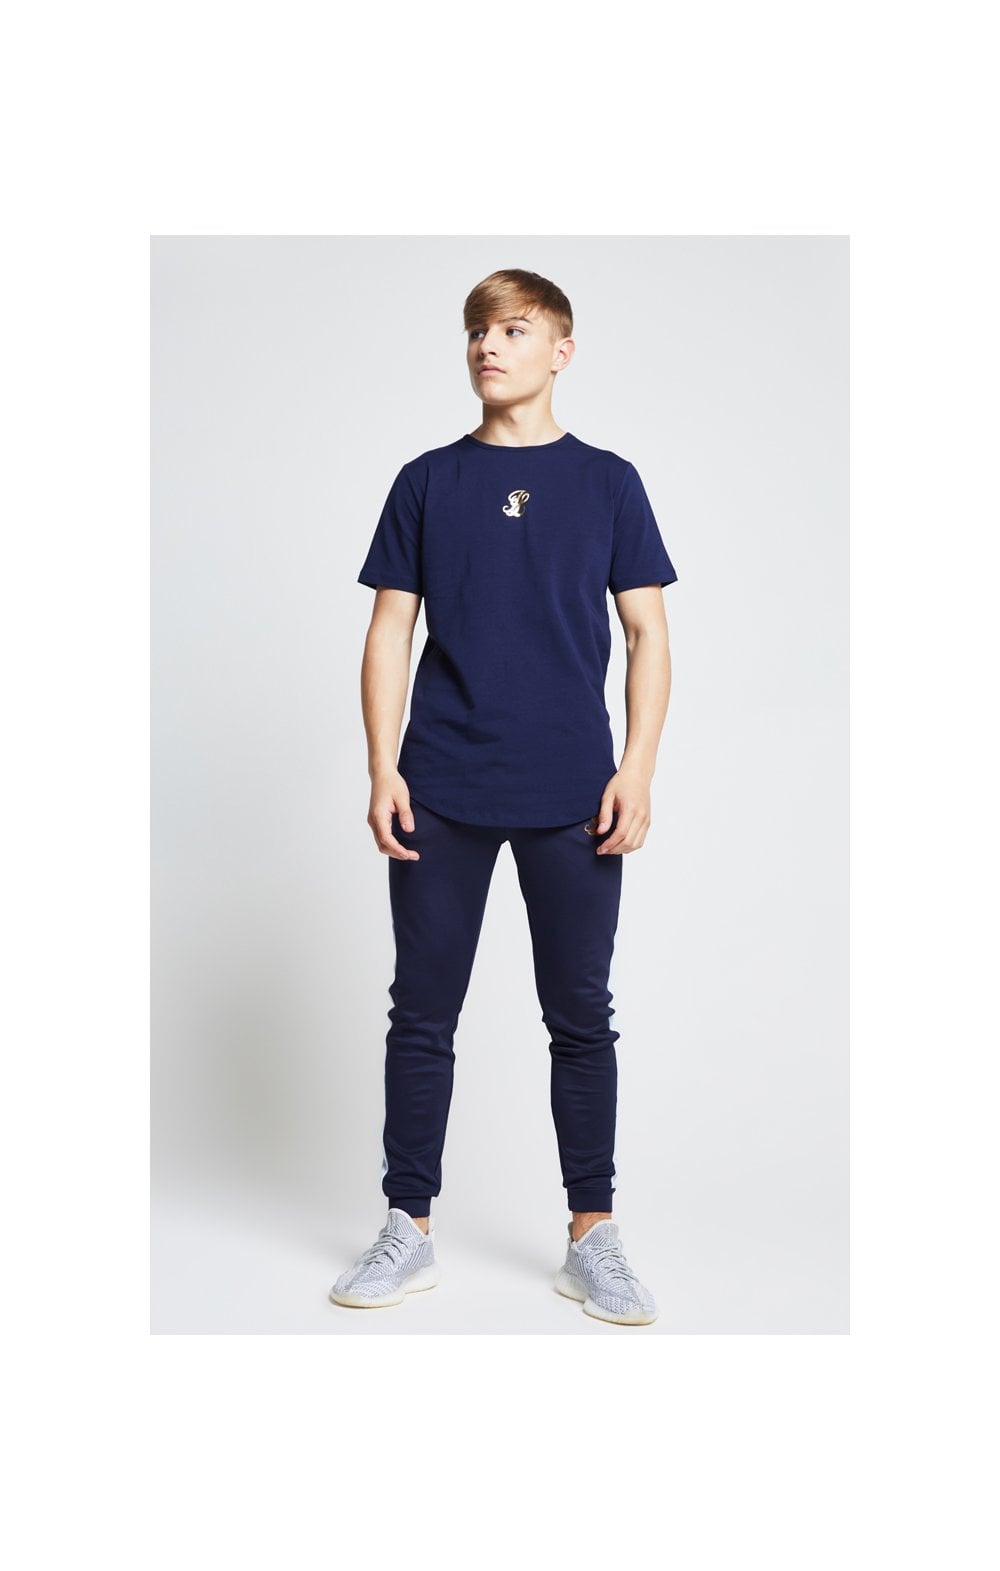 Illusive London T-Shirt Schulterfrei Marmor - Marineblau und Marmor (3)